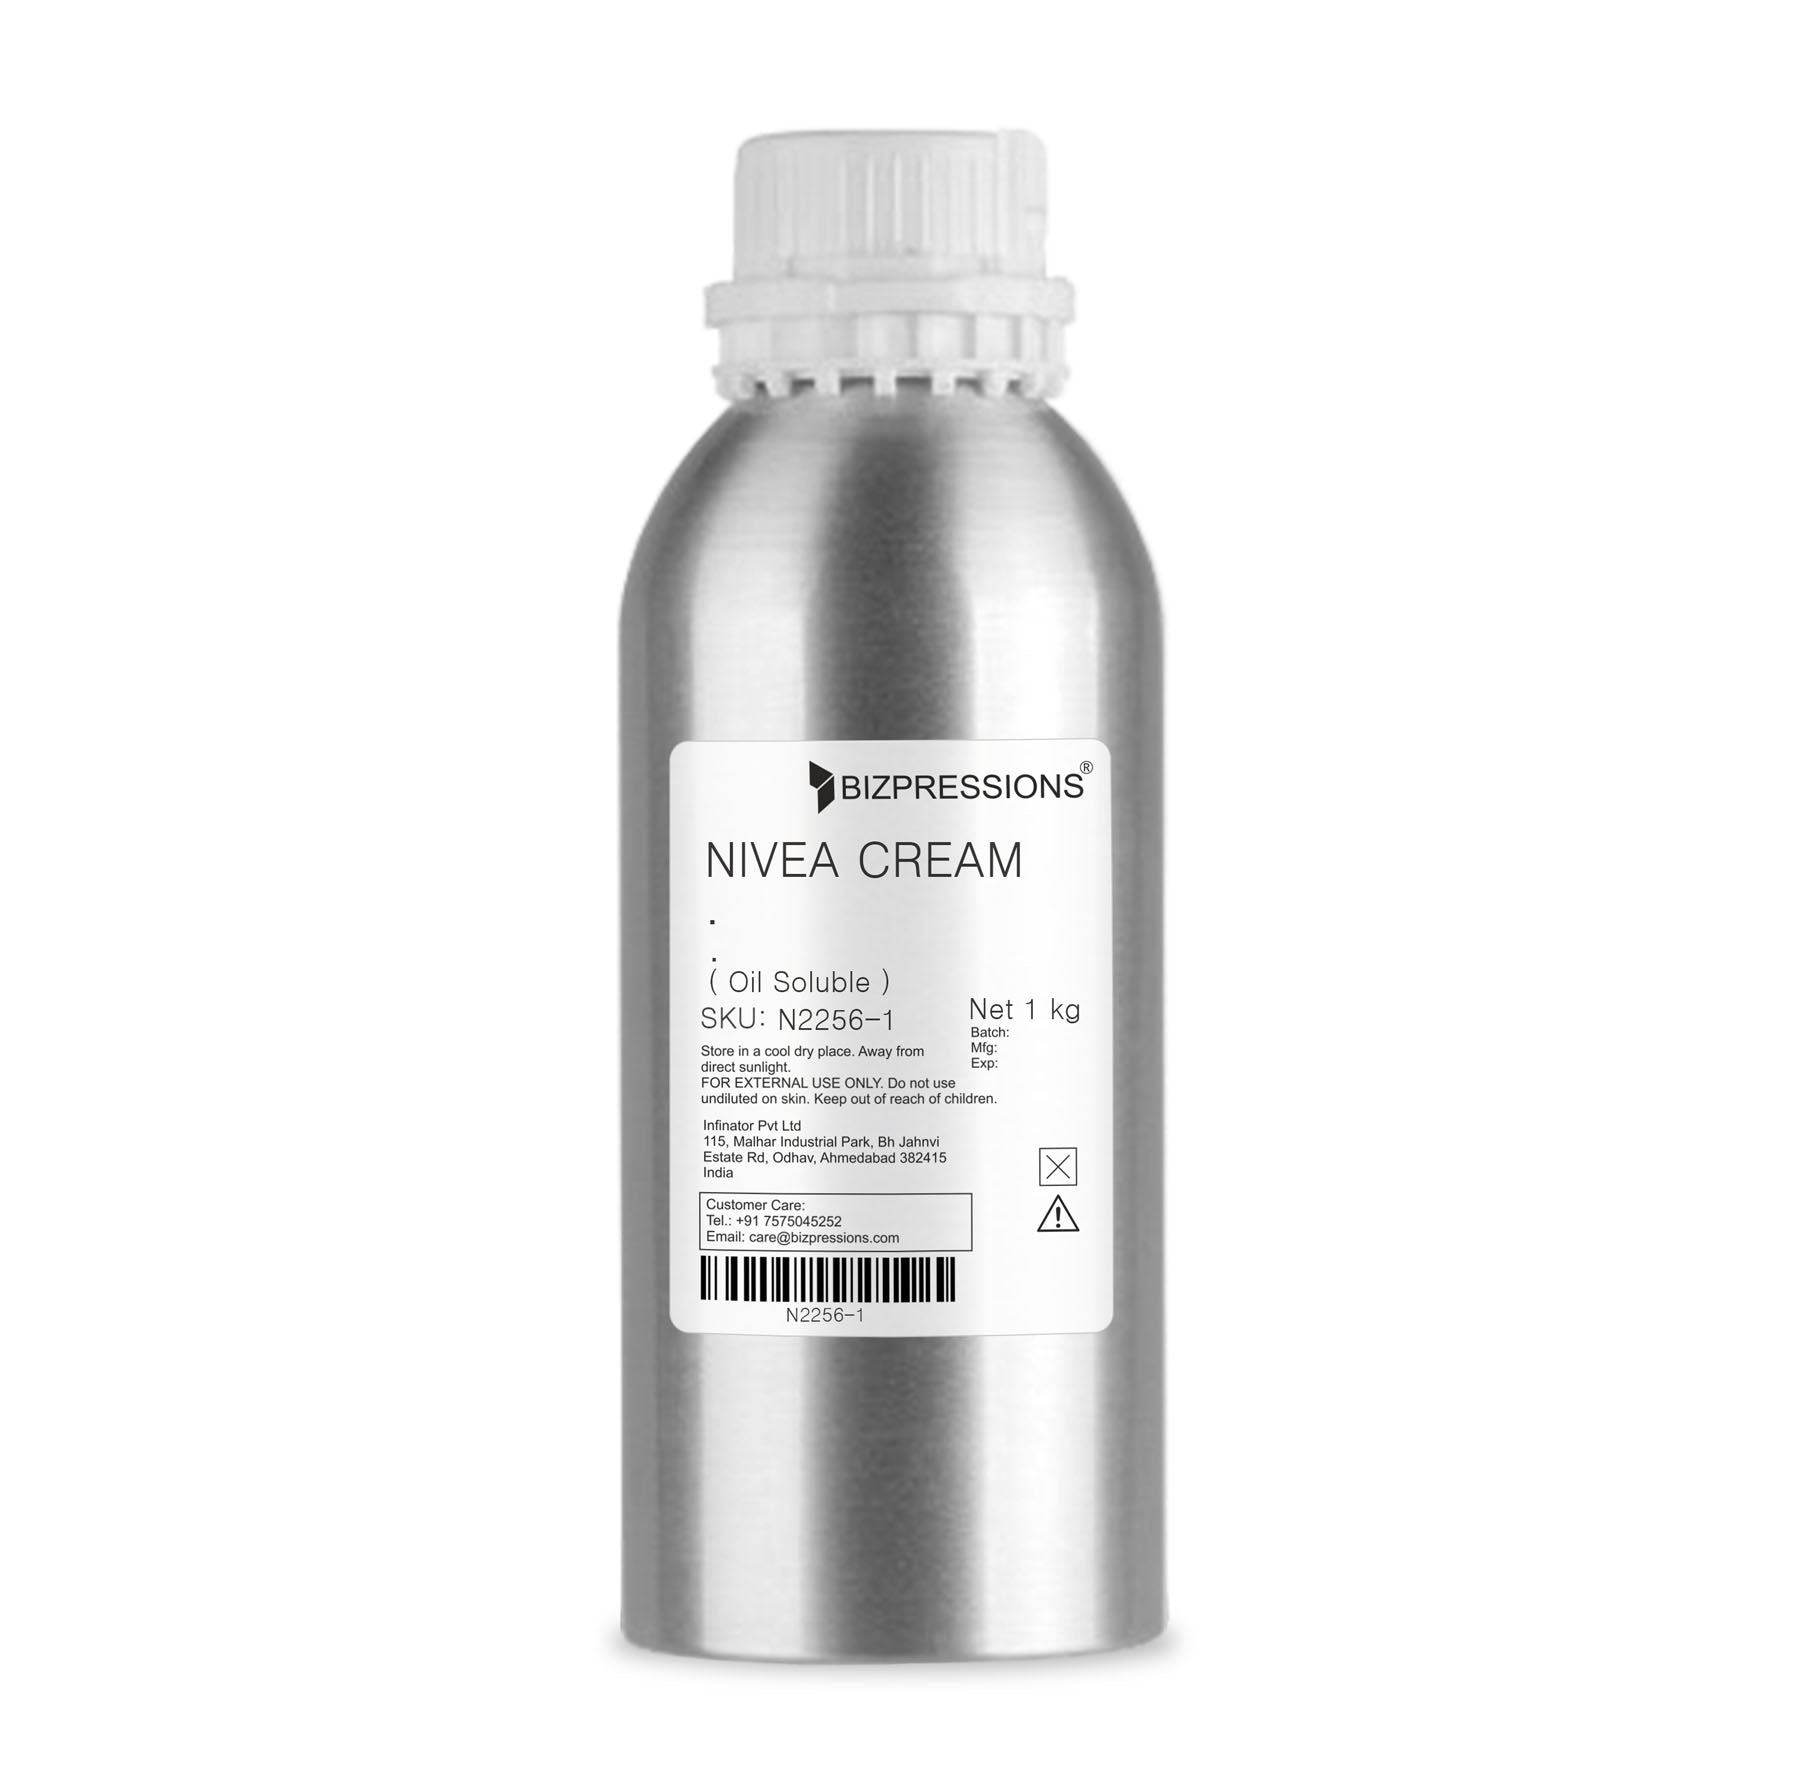 NIVEA CREAM - Fragrance ( Oil Soluble ) - 1 kg